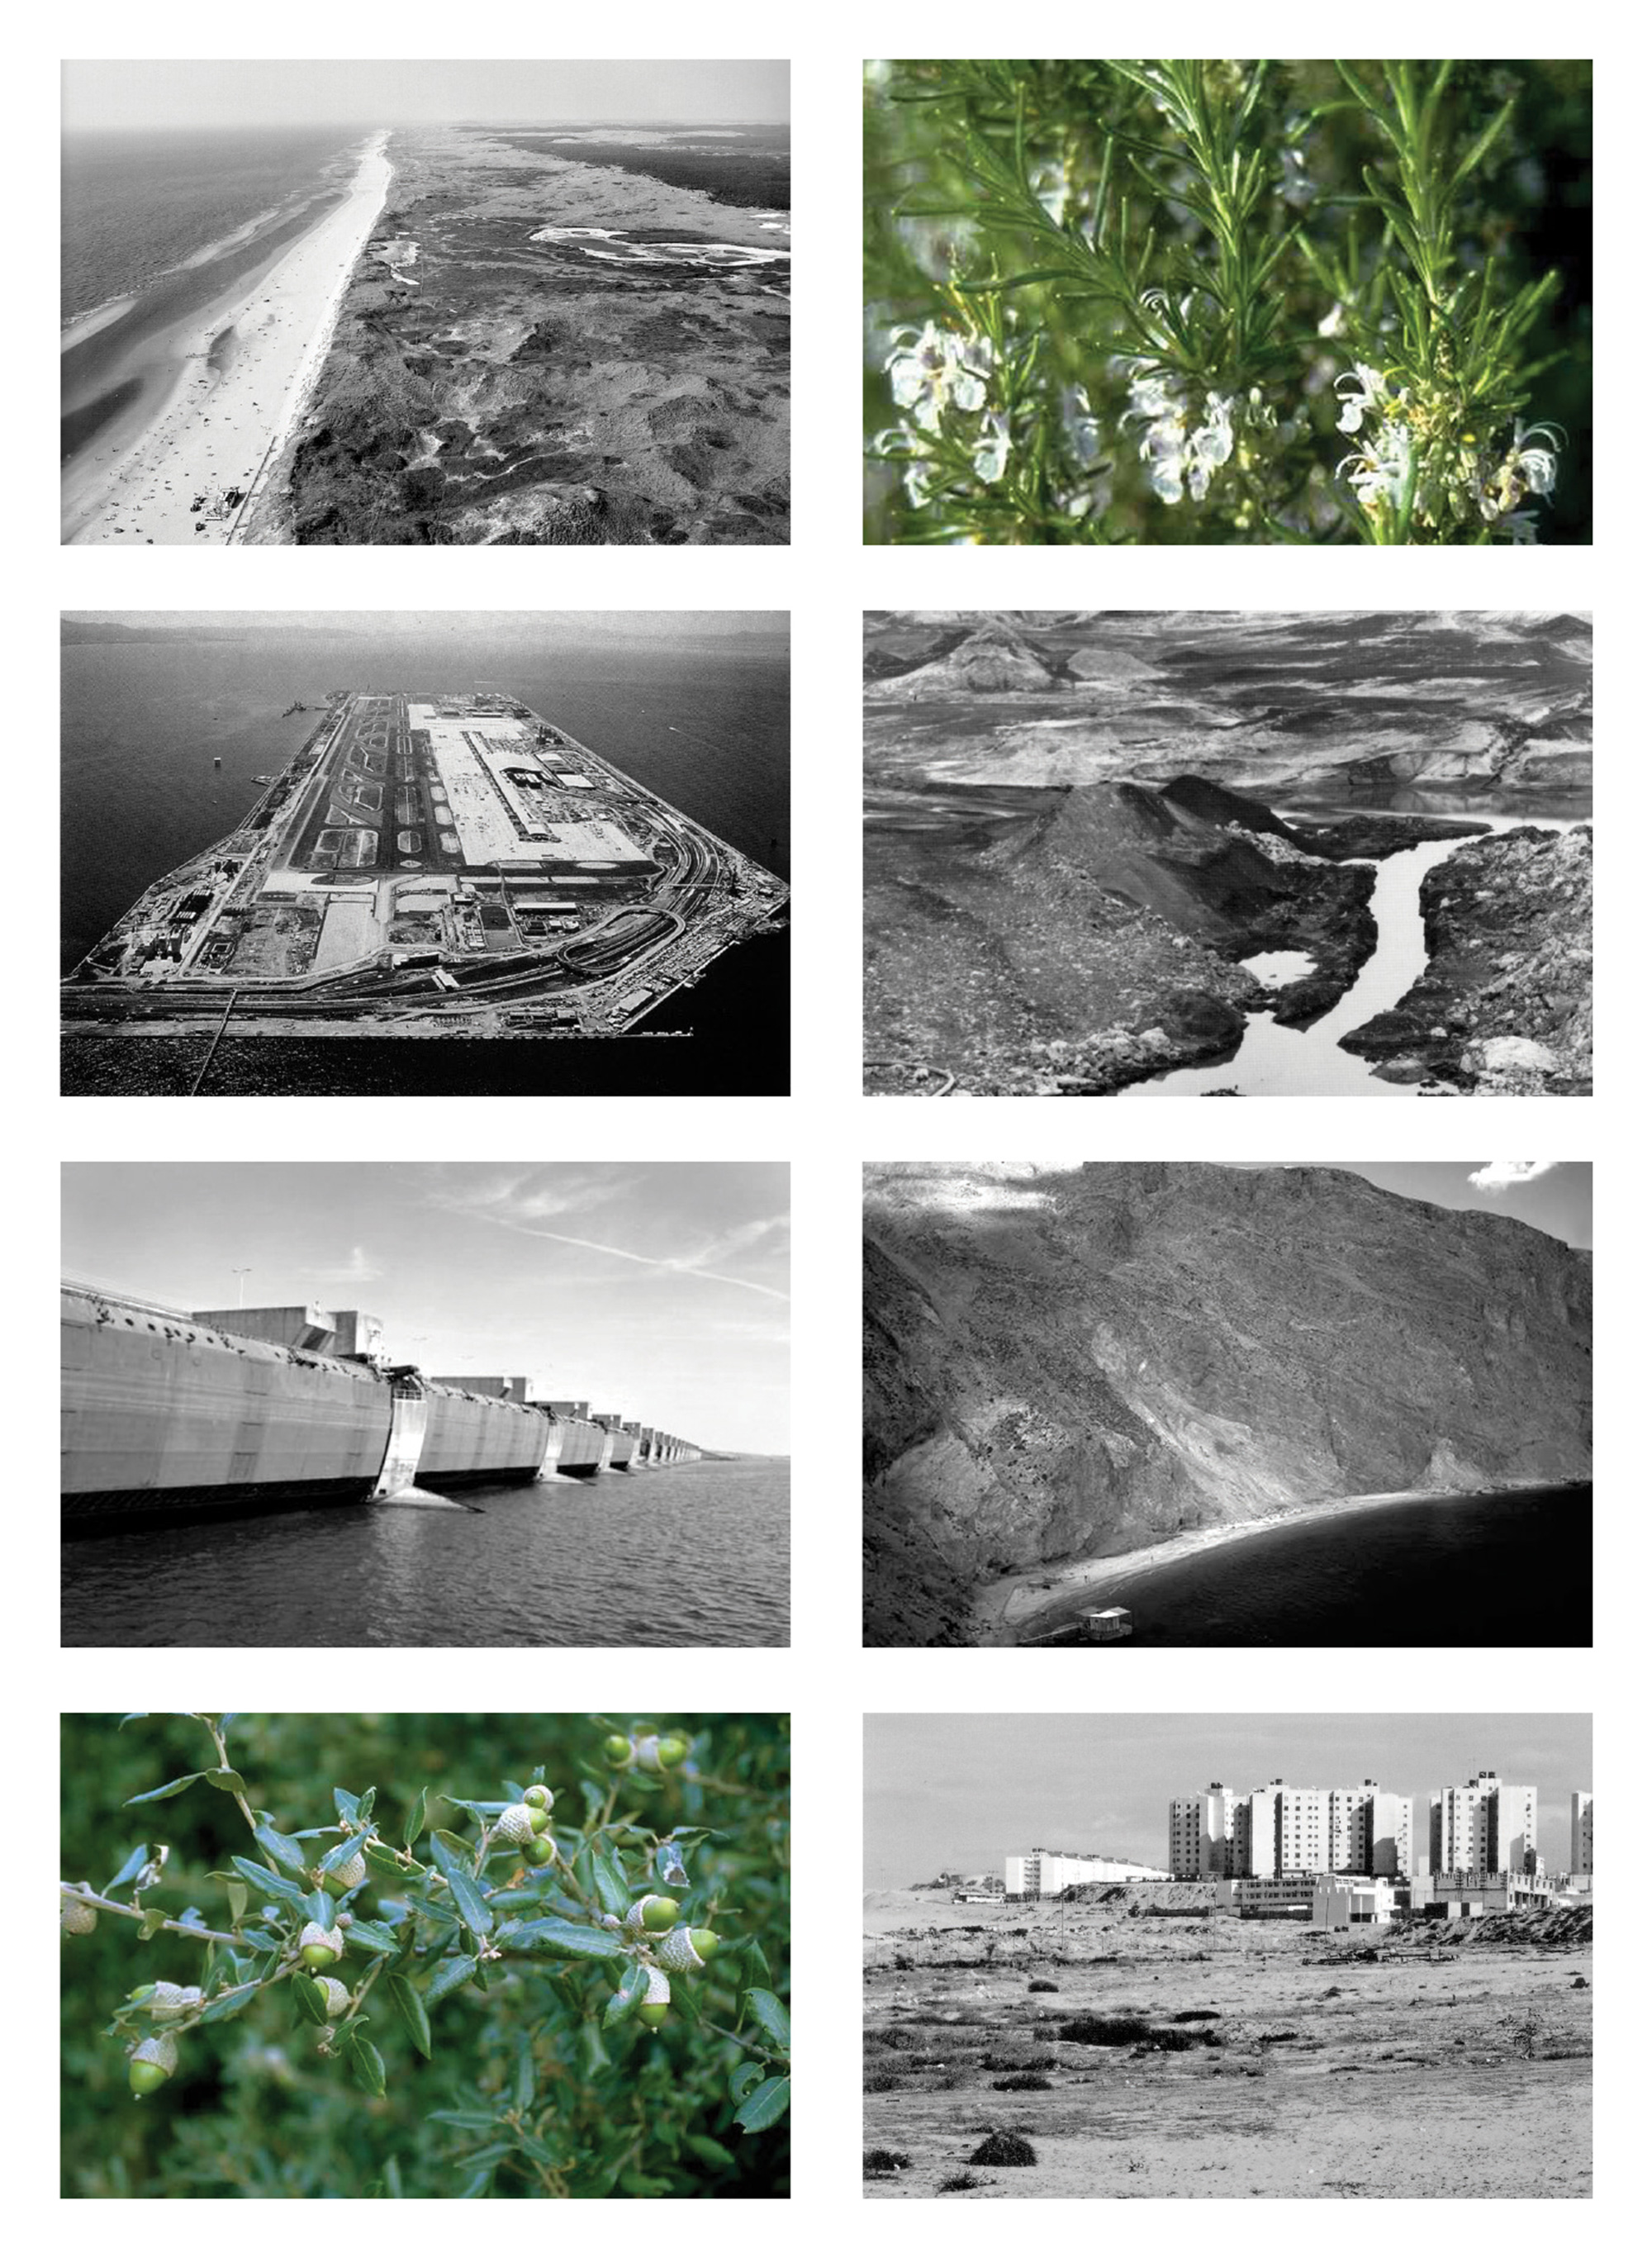 Photographs of dams, flora, and coastland.